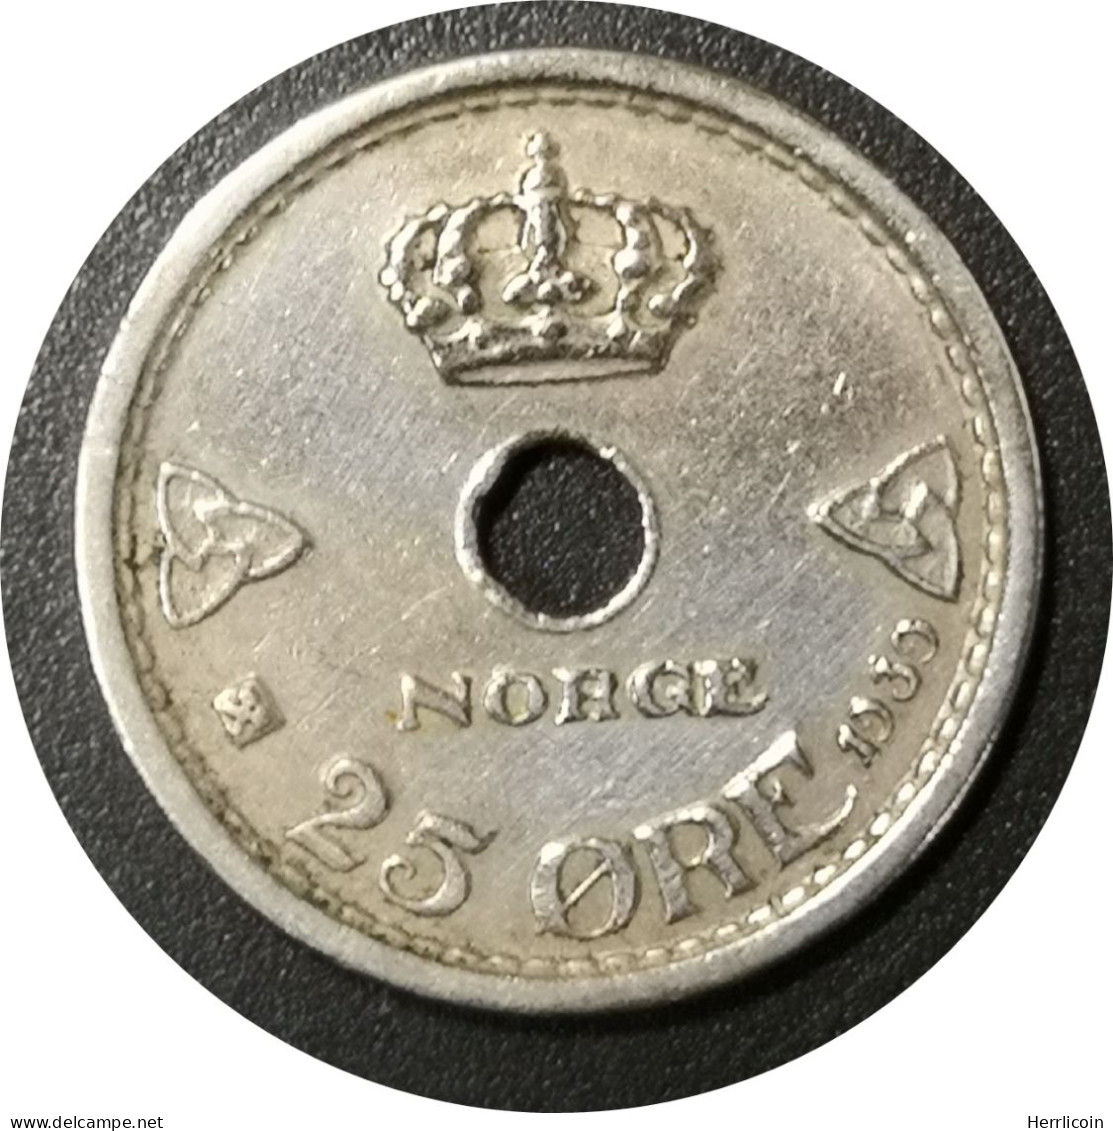 Monnaie Norvège - 1939 - 25 øre - Haakon VII - Norwegen